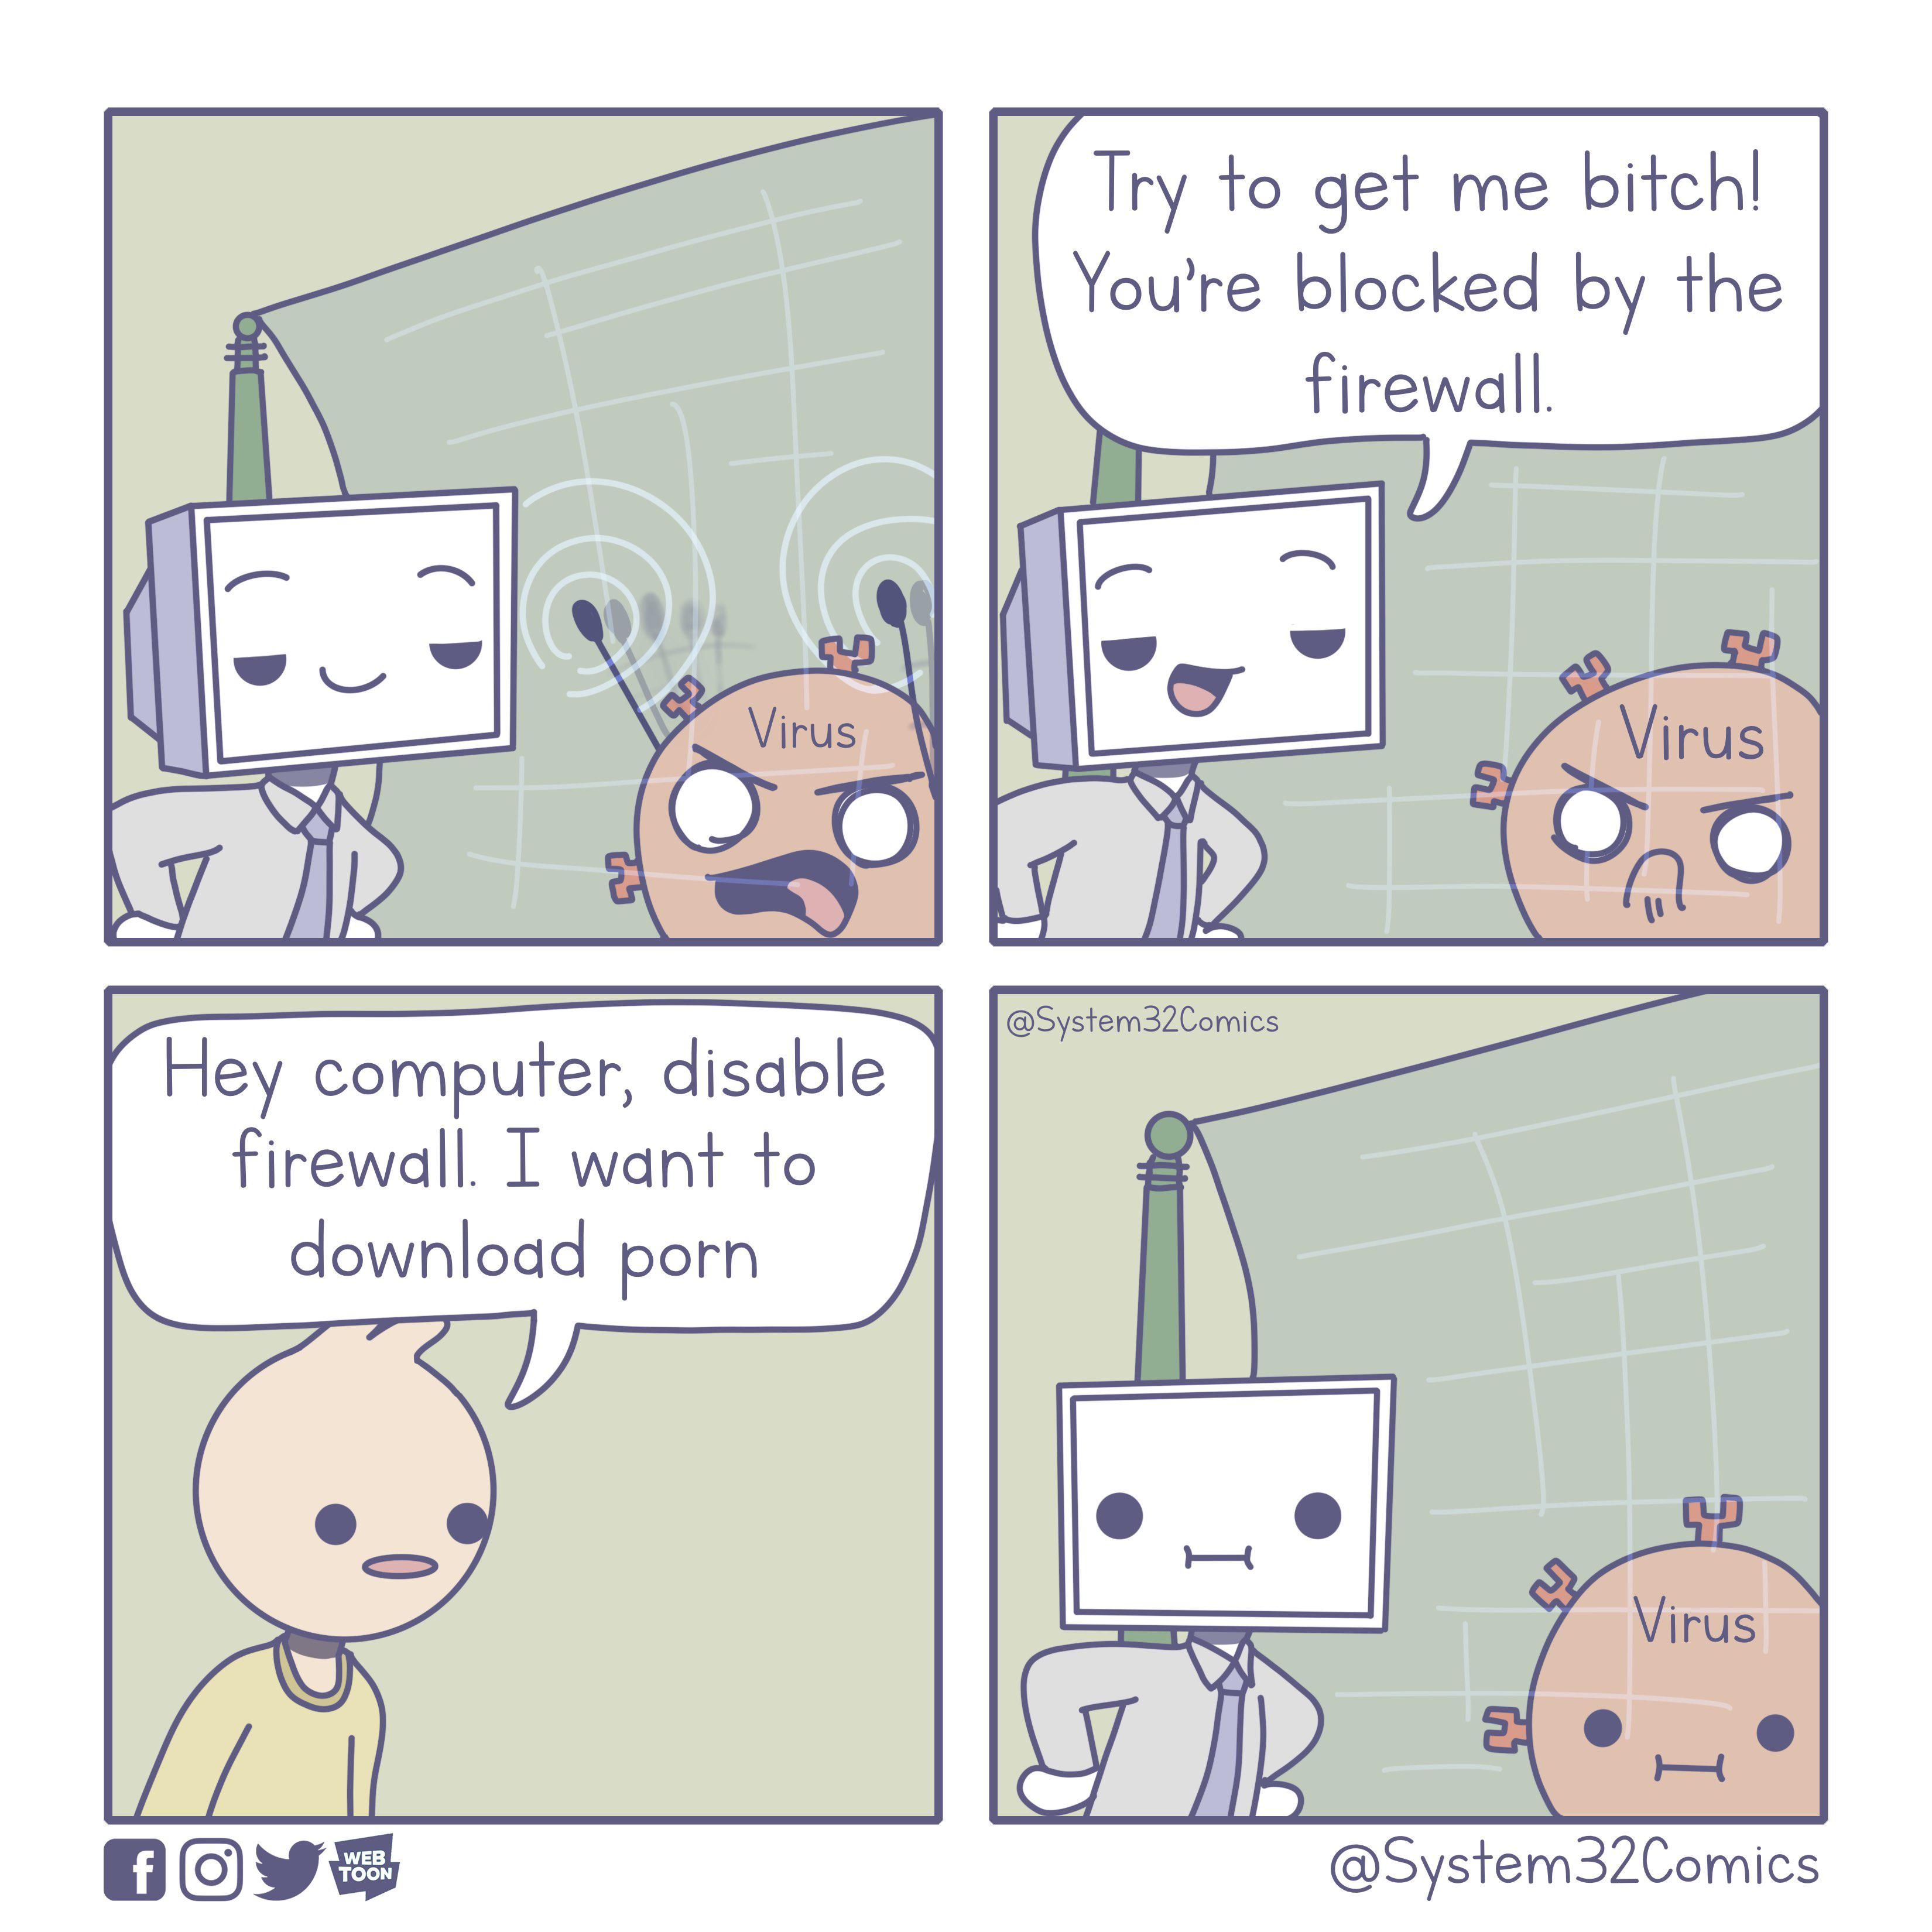 firewall is